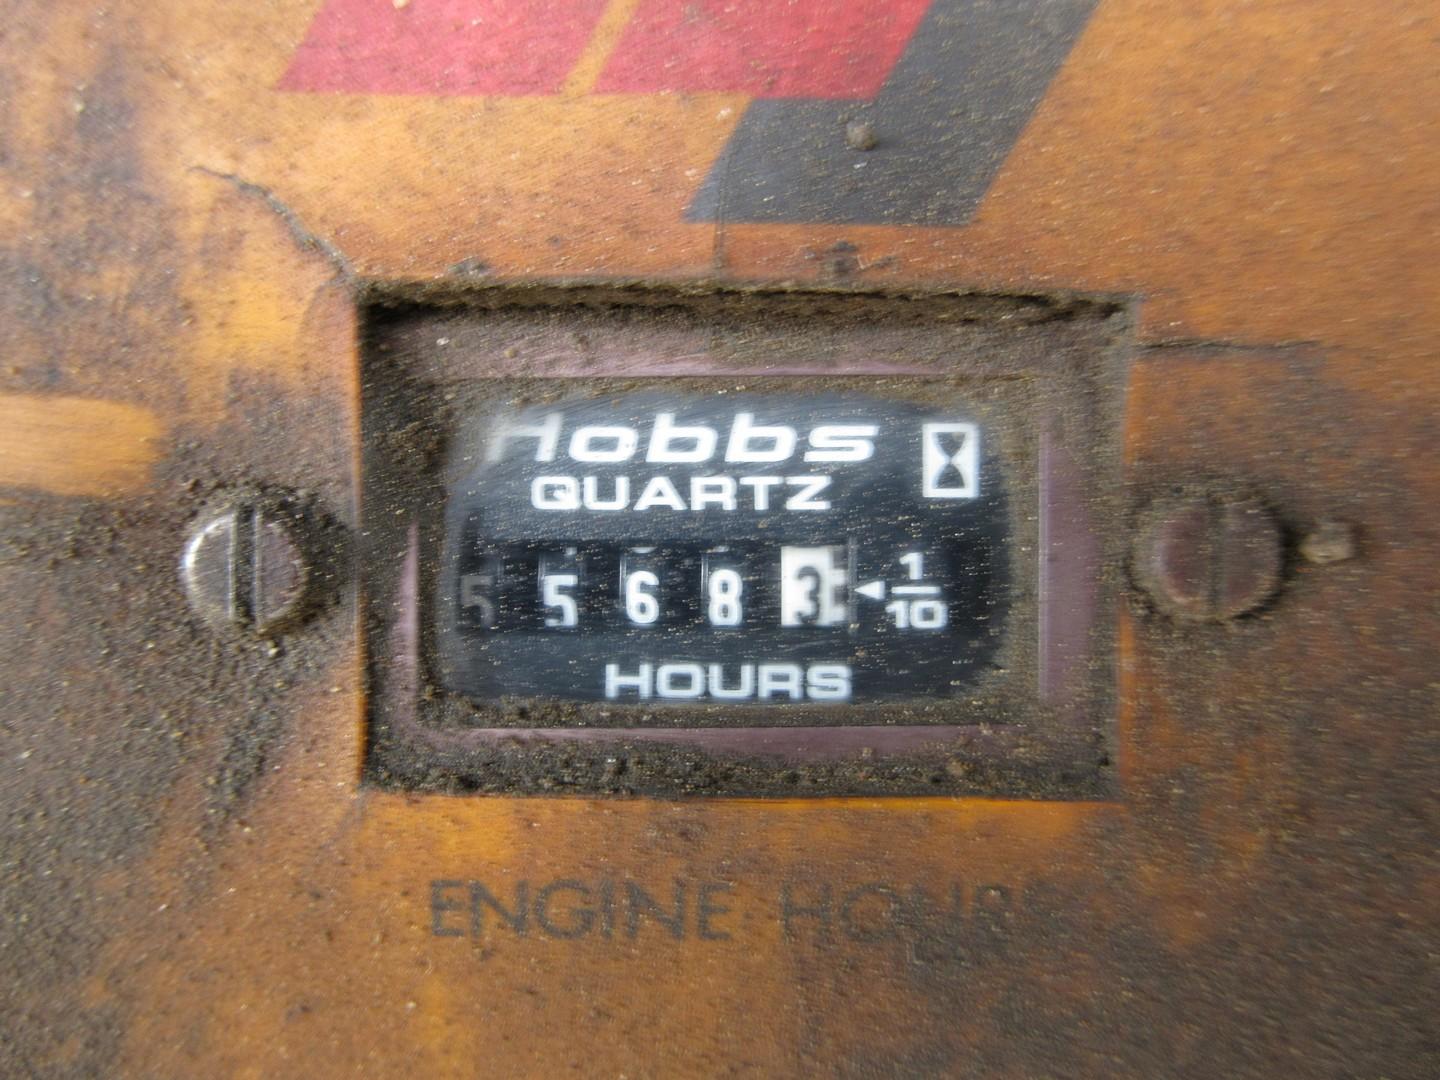 1997 Extec Robotrac Tracked Screening Plant